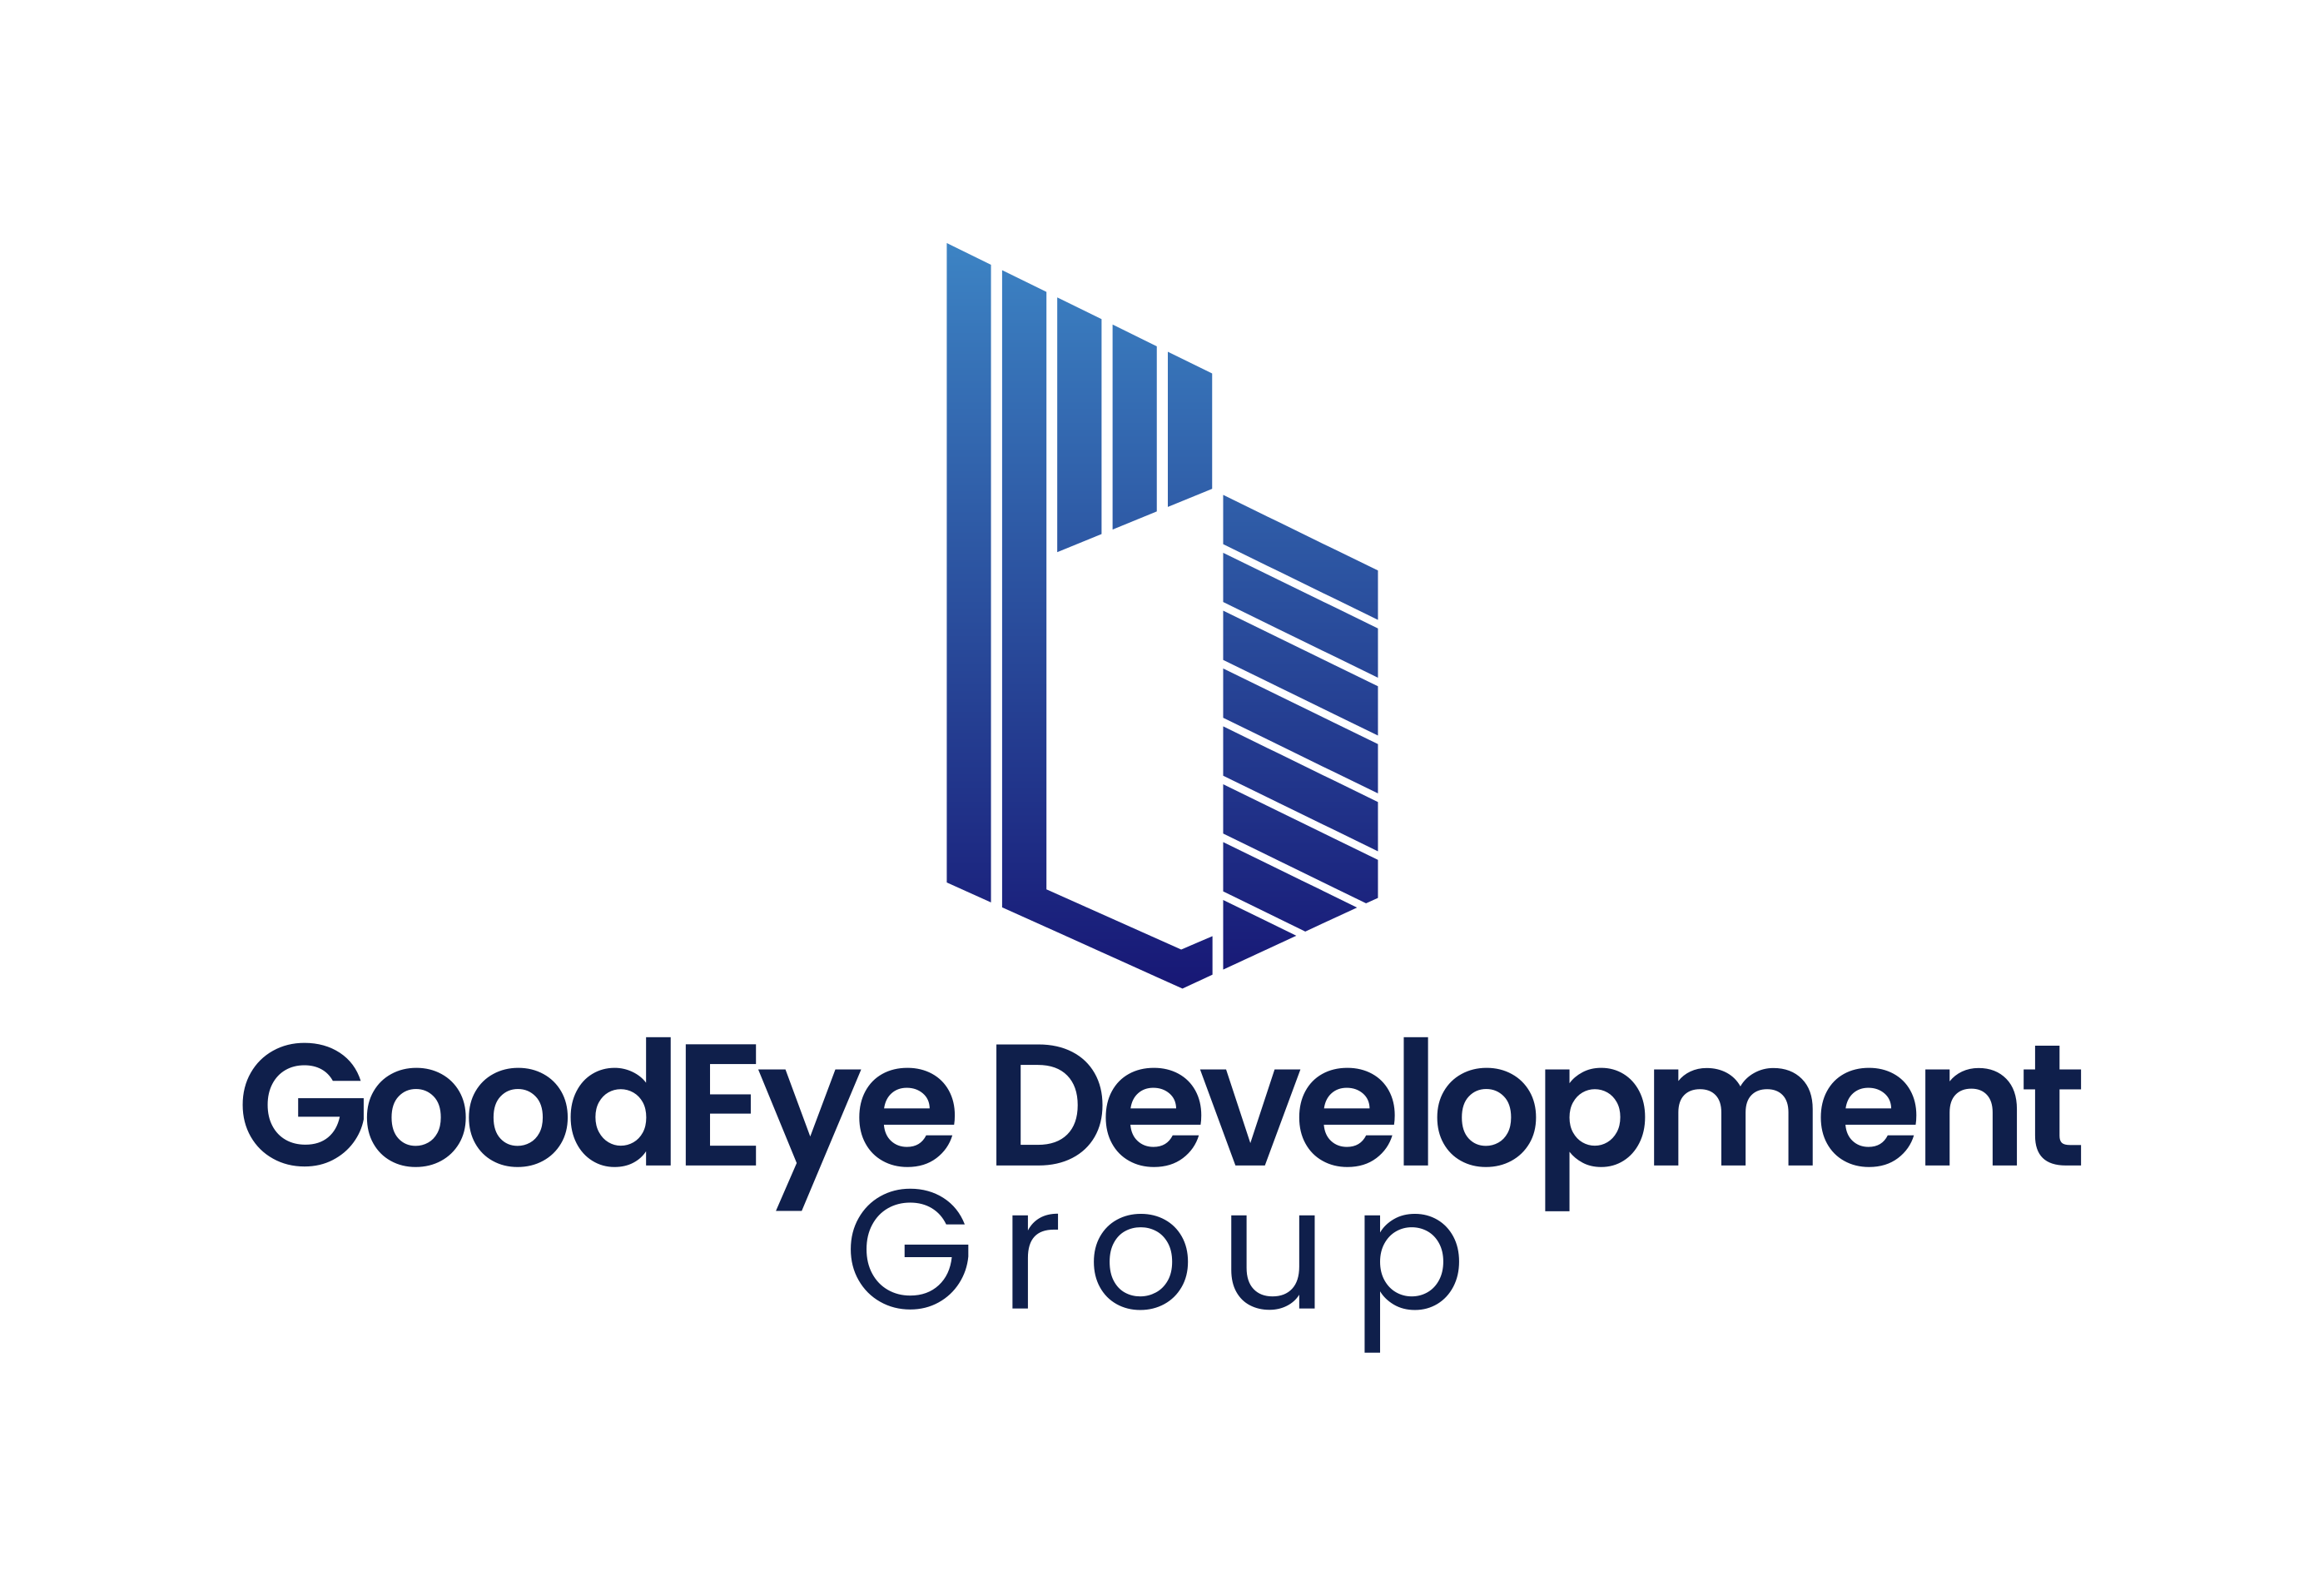 Good Eye Development Group